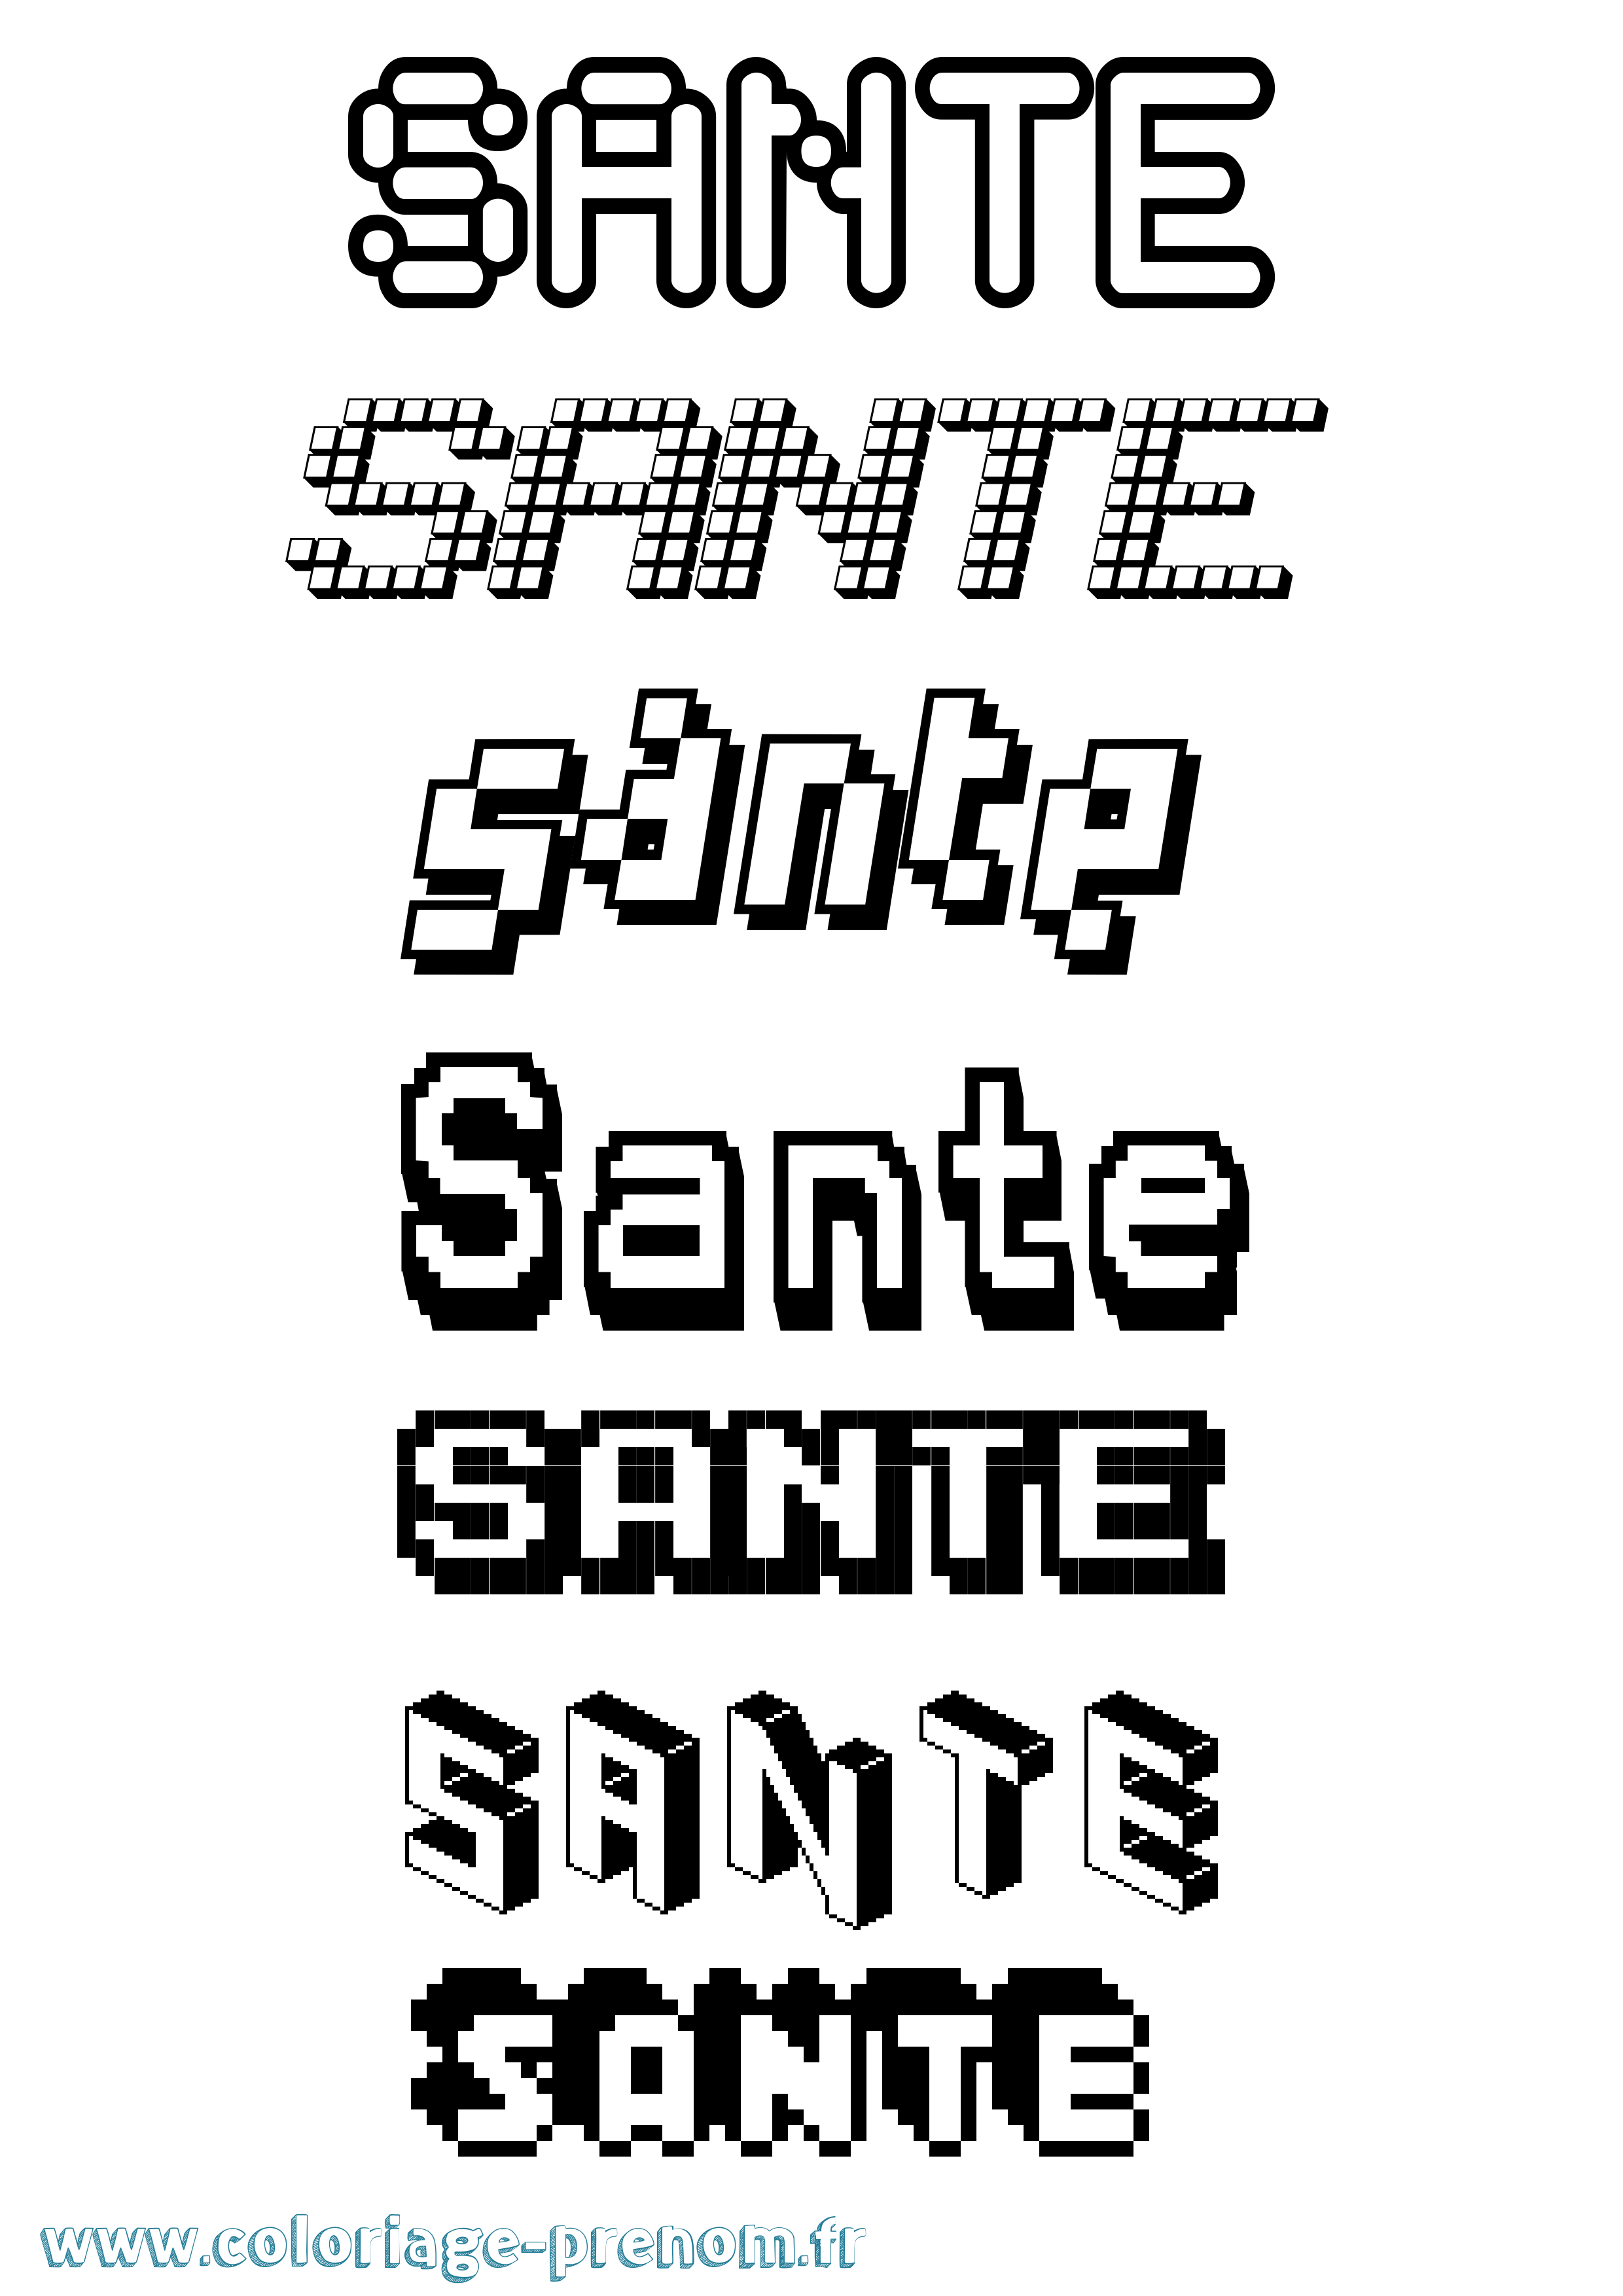 Coloriage prénom Sante Pixel